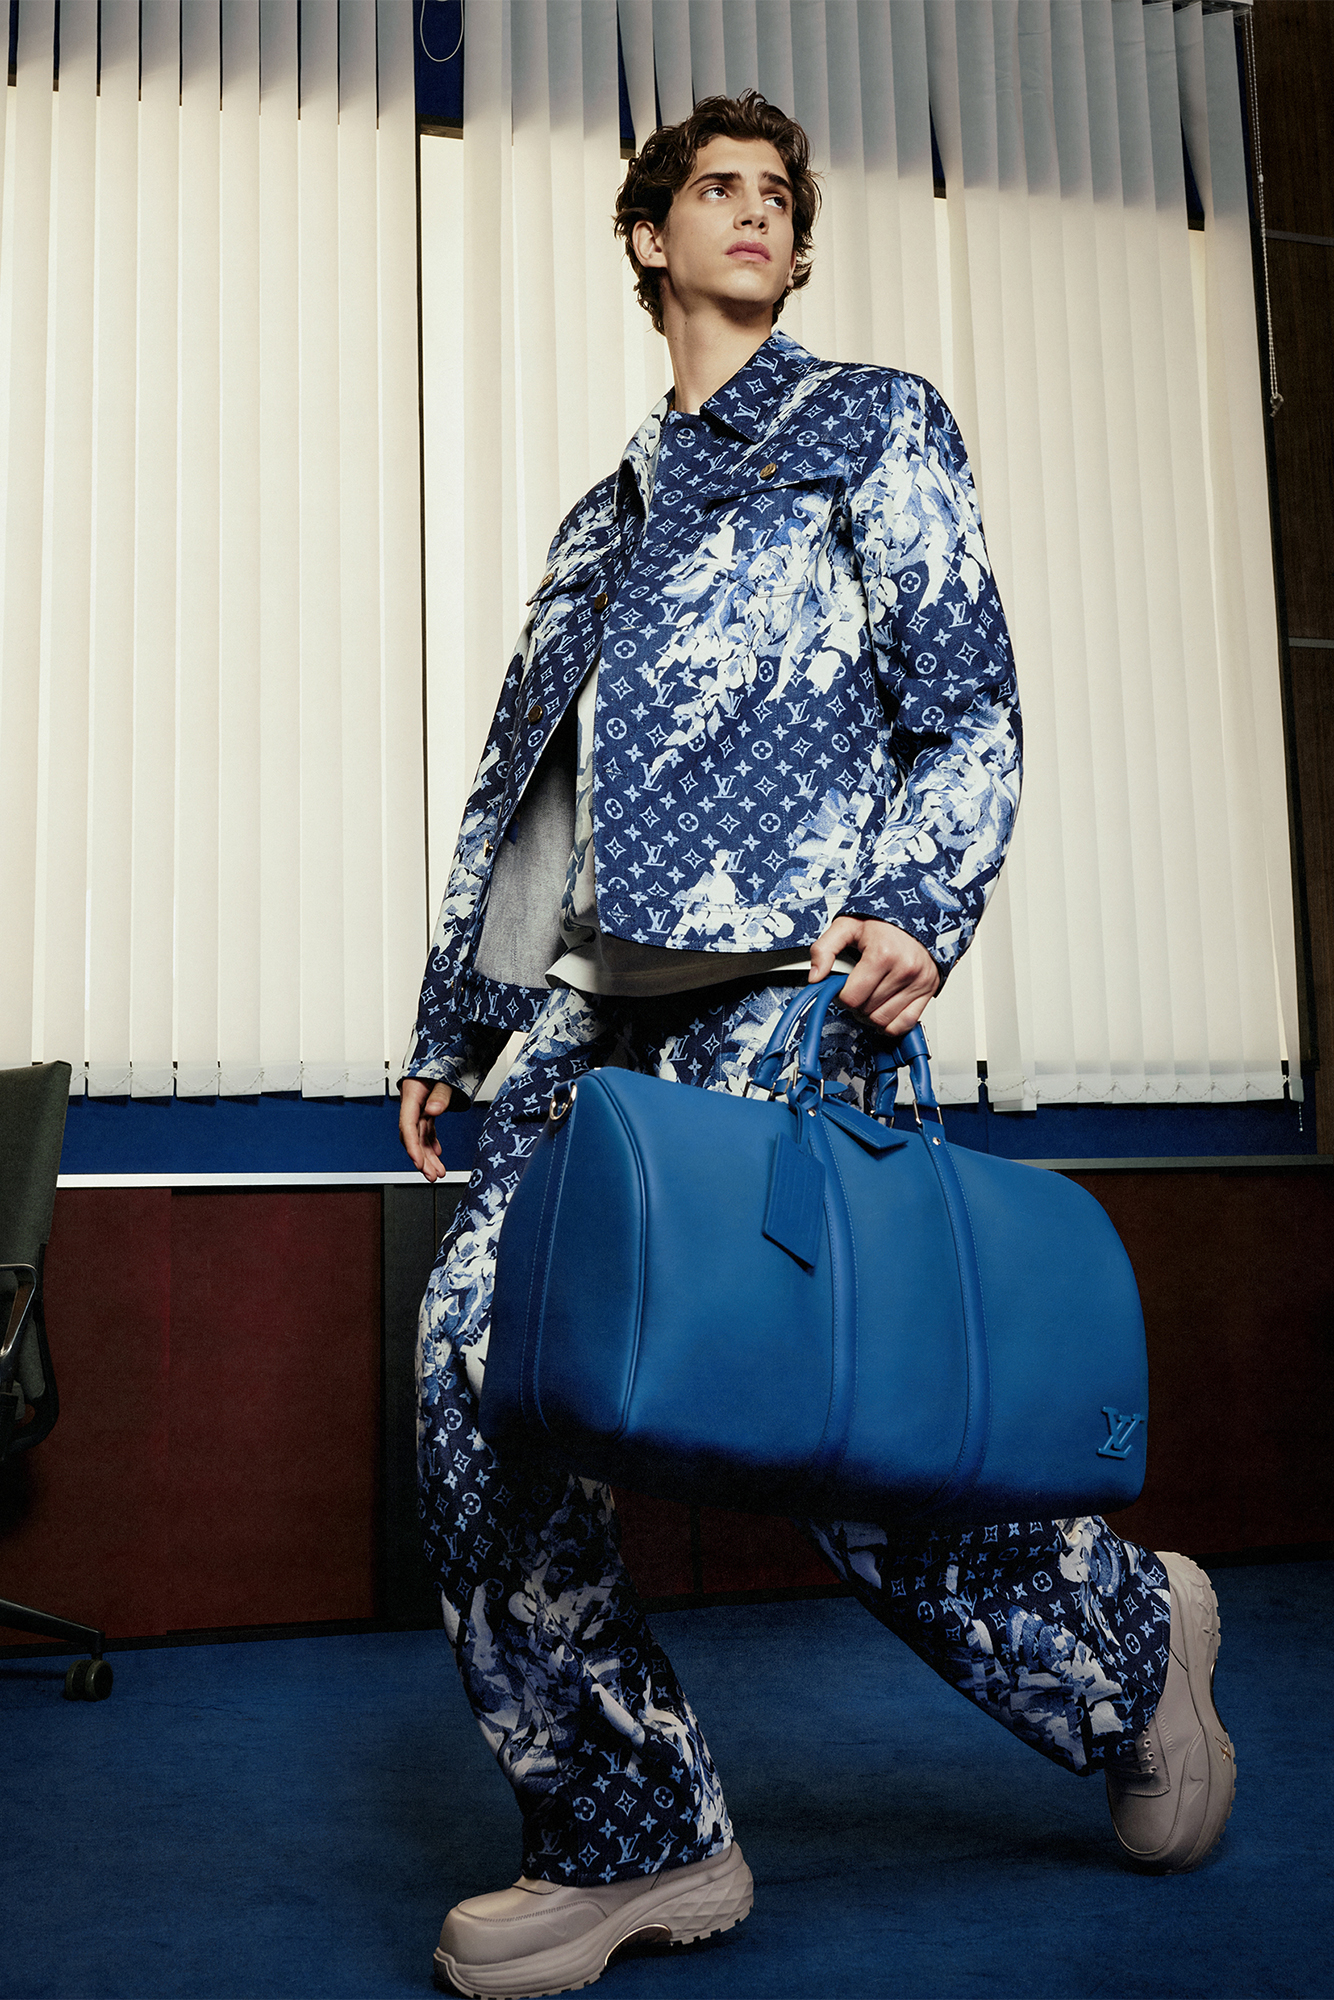 Model in denim/acid wash Louis Vuitton monogram jacket and pants with blue bag